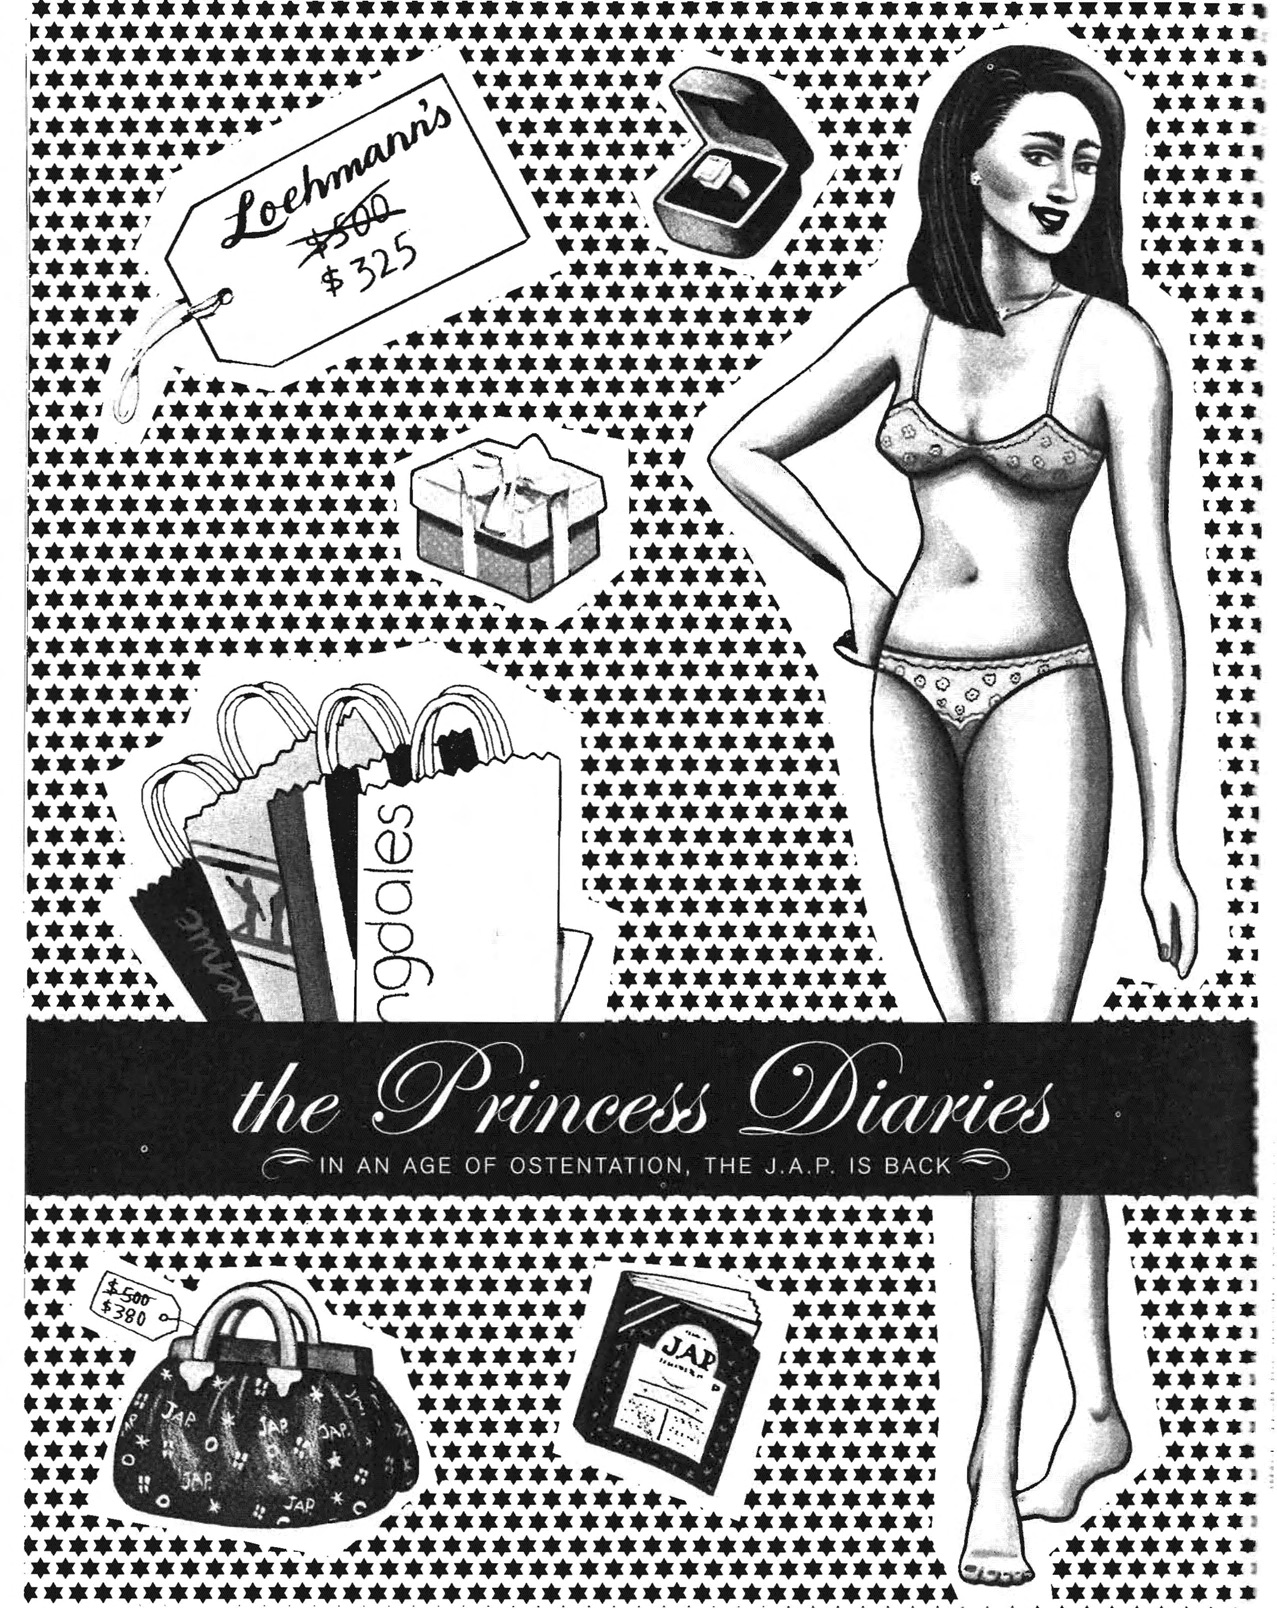 ThePrincessDiaries_BitchMagazine.jpg